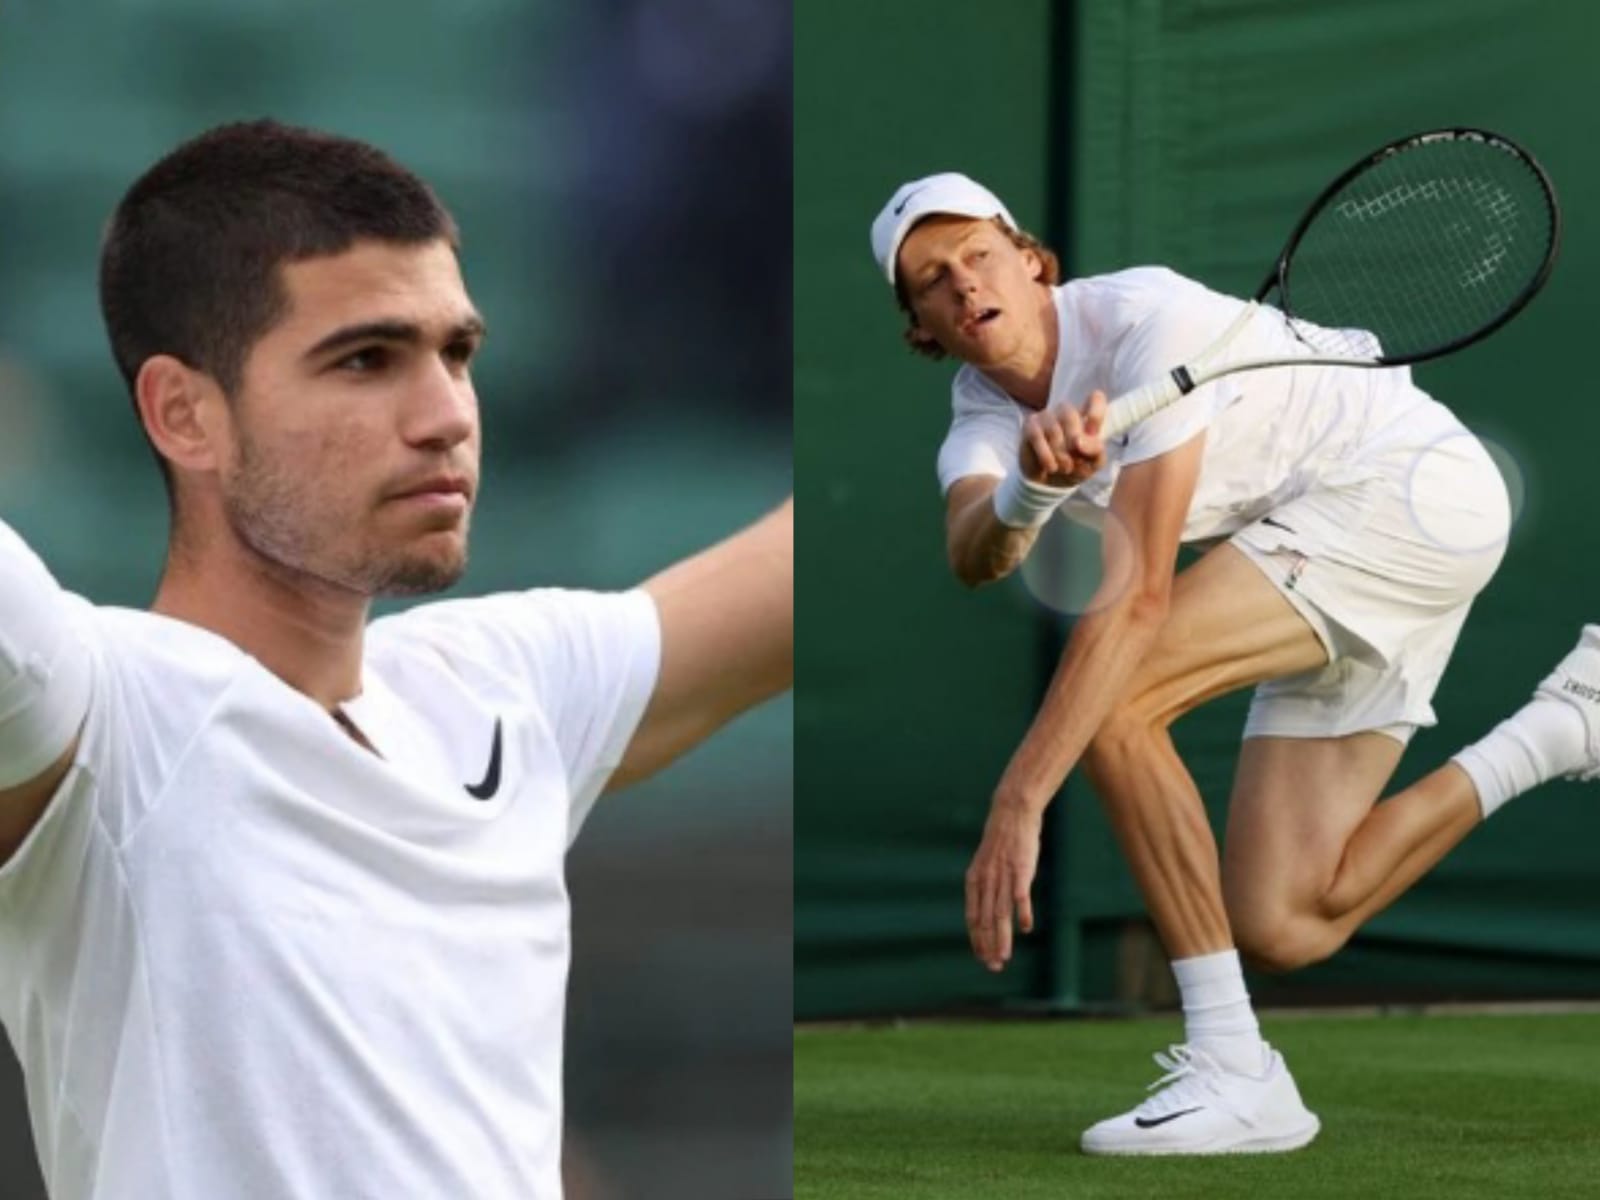 Wimbledon 2022 LIVE: Carlos Alcaraz and Jannik Sinner offer a glimpse of future rivalry at Wimbledon